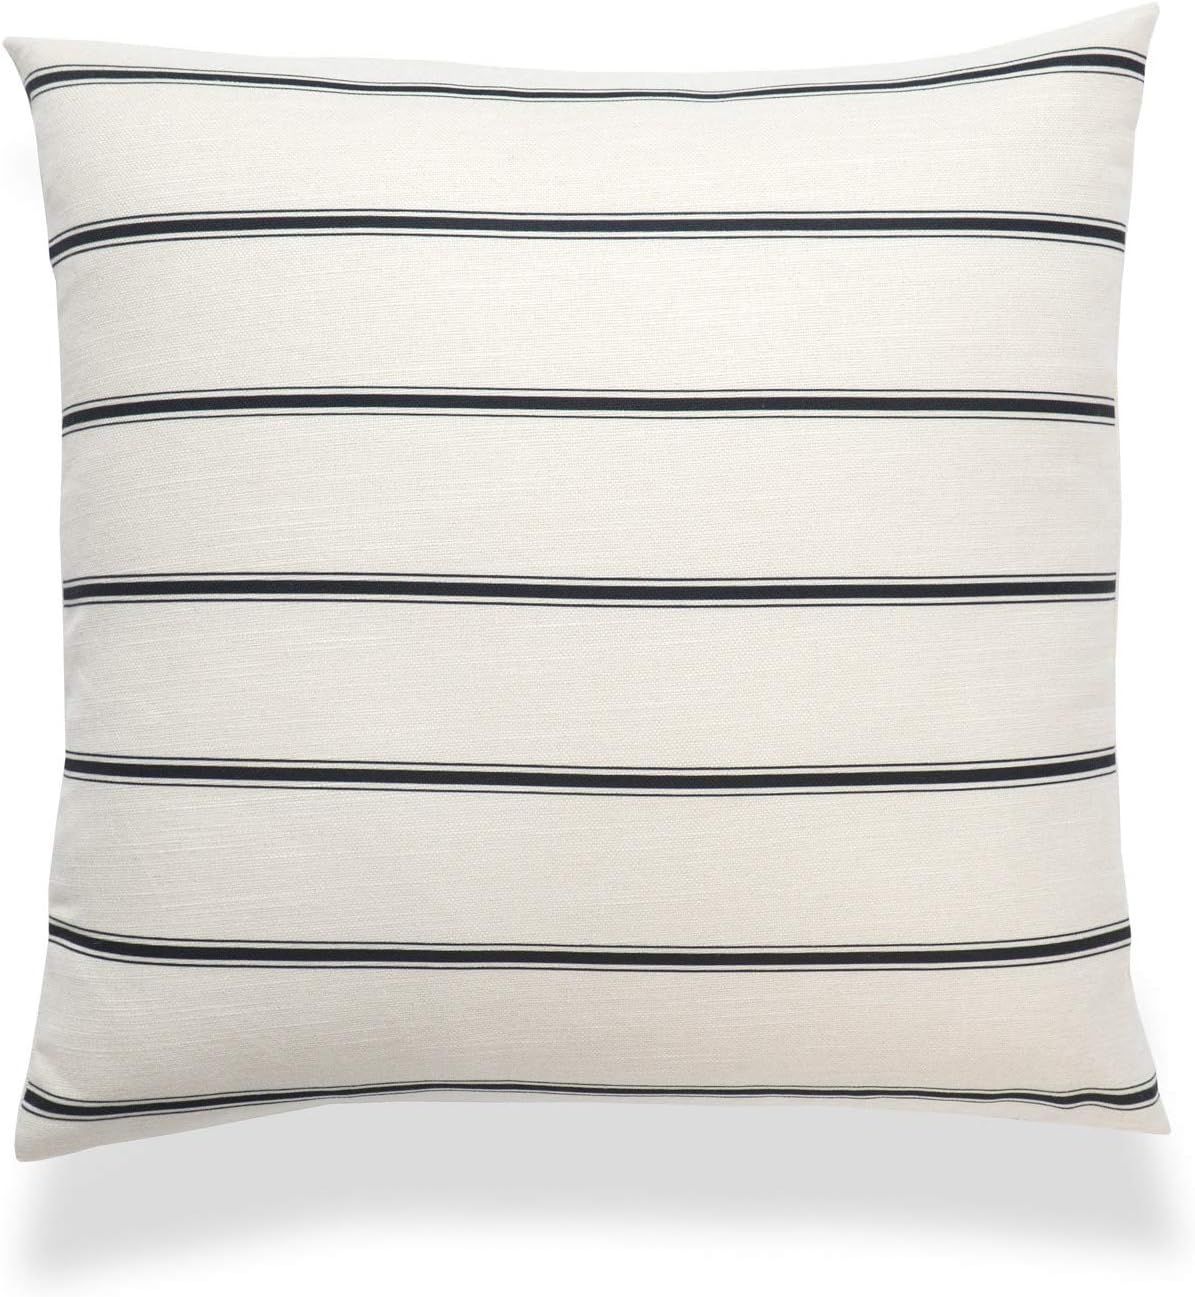 Hofdeco Mid Century Neutral Decorative Pillow Cover ONLY, Black Beige Stripes, 18"x18" | Amazon (US)